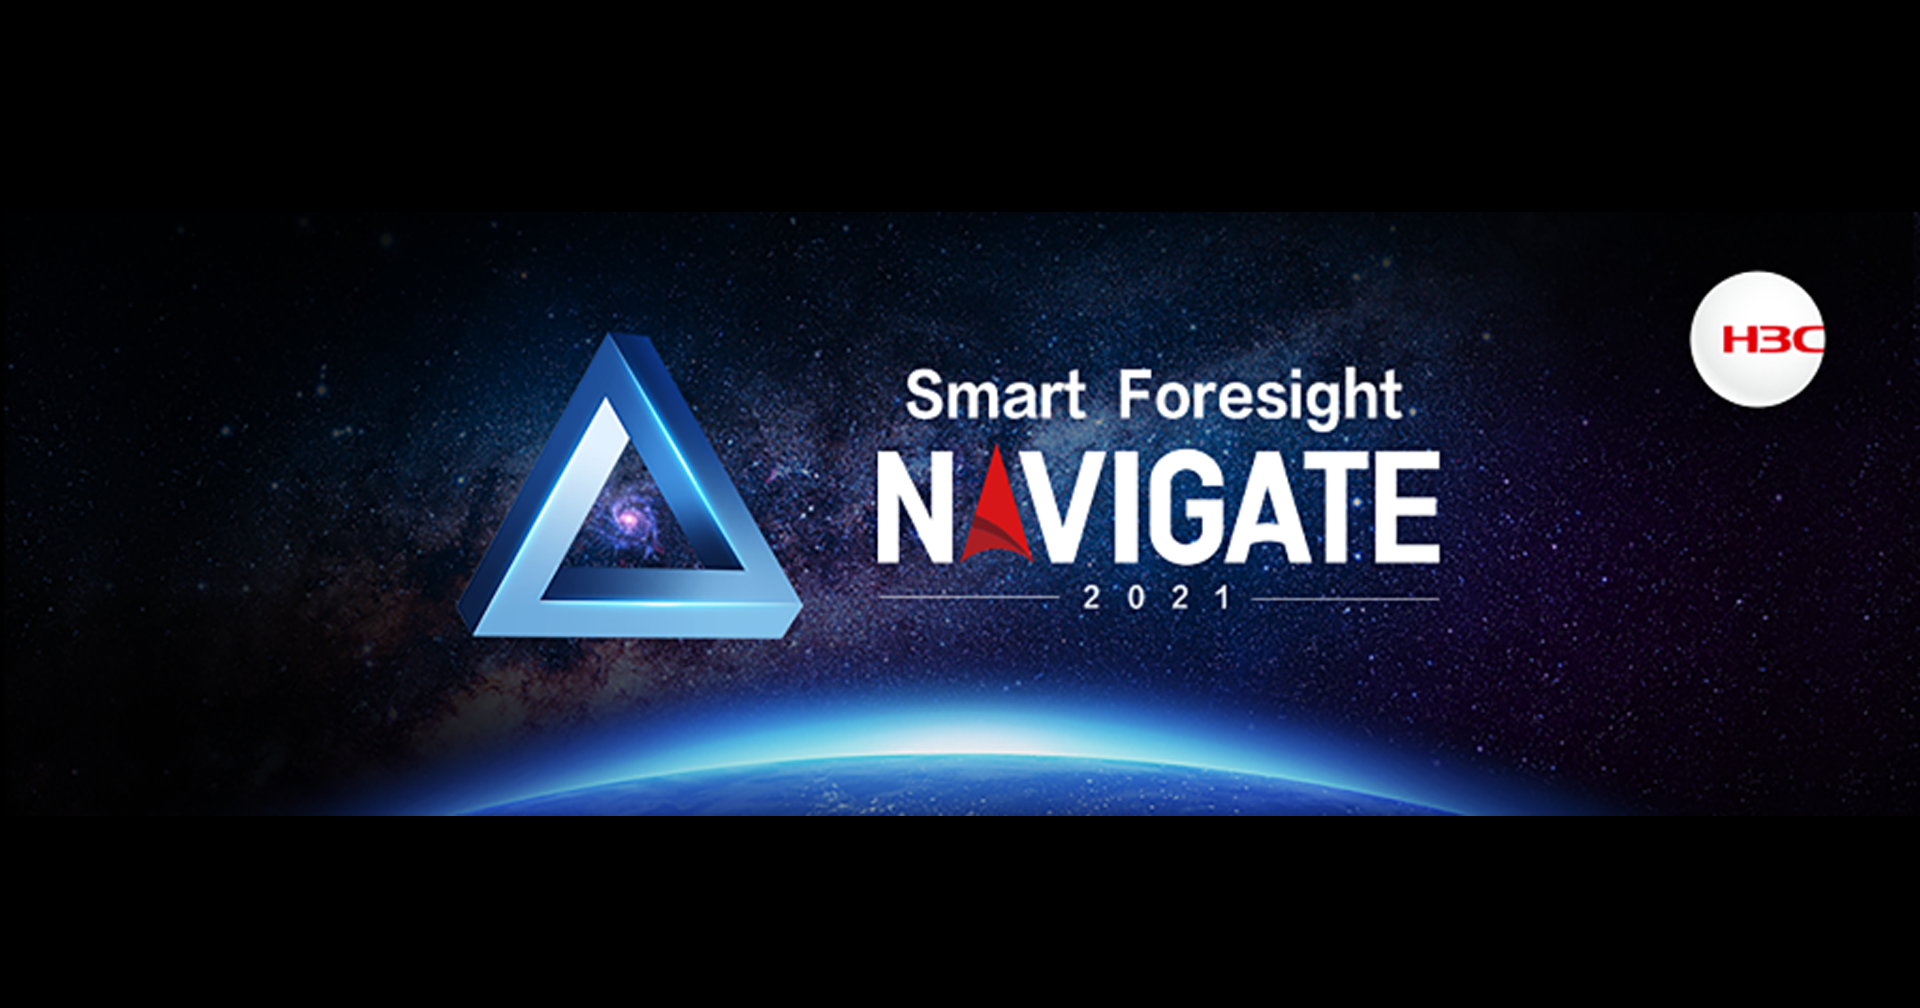 H3C Navigate 2021: Smart Foresight